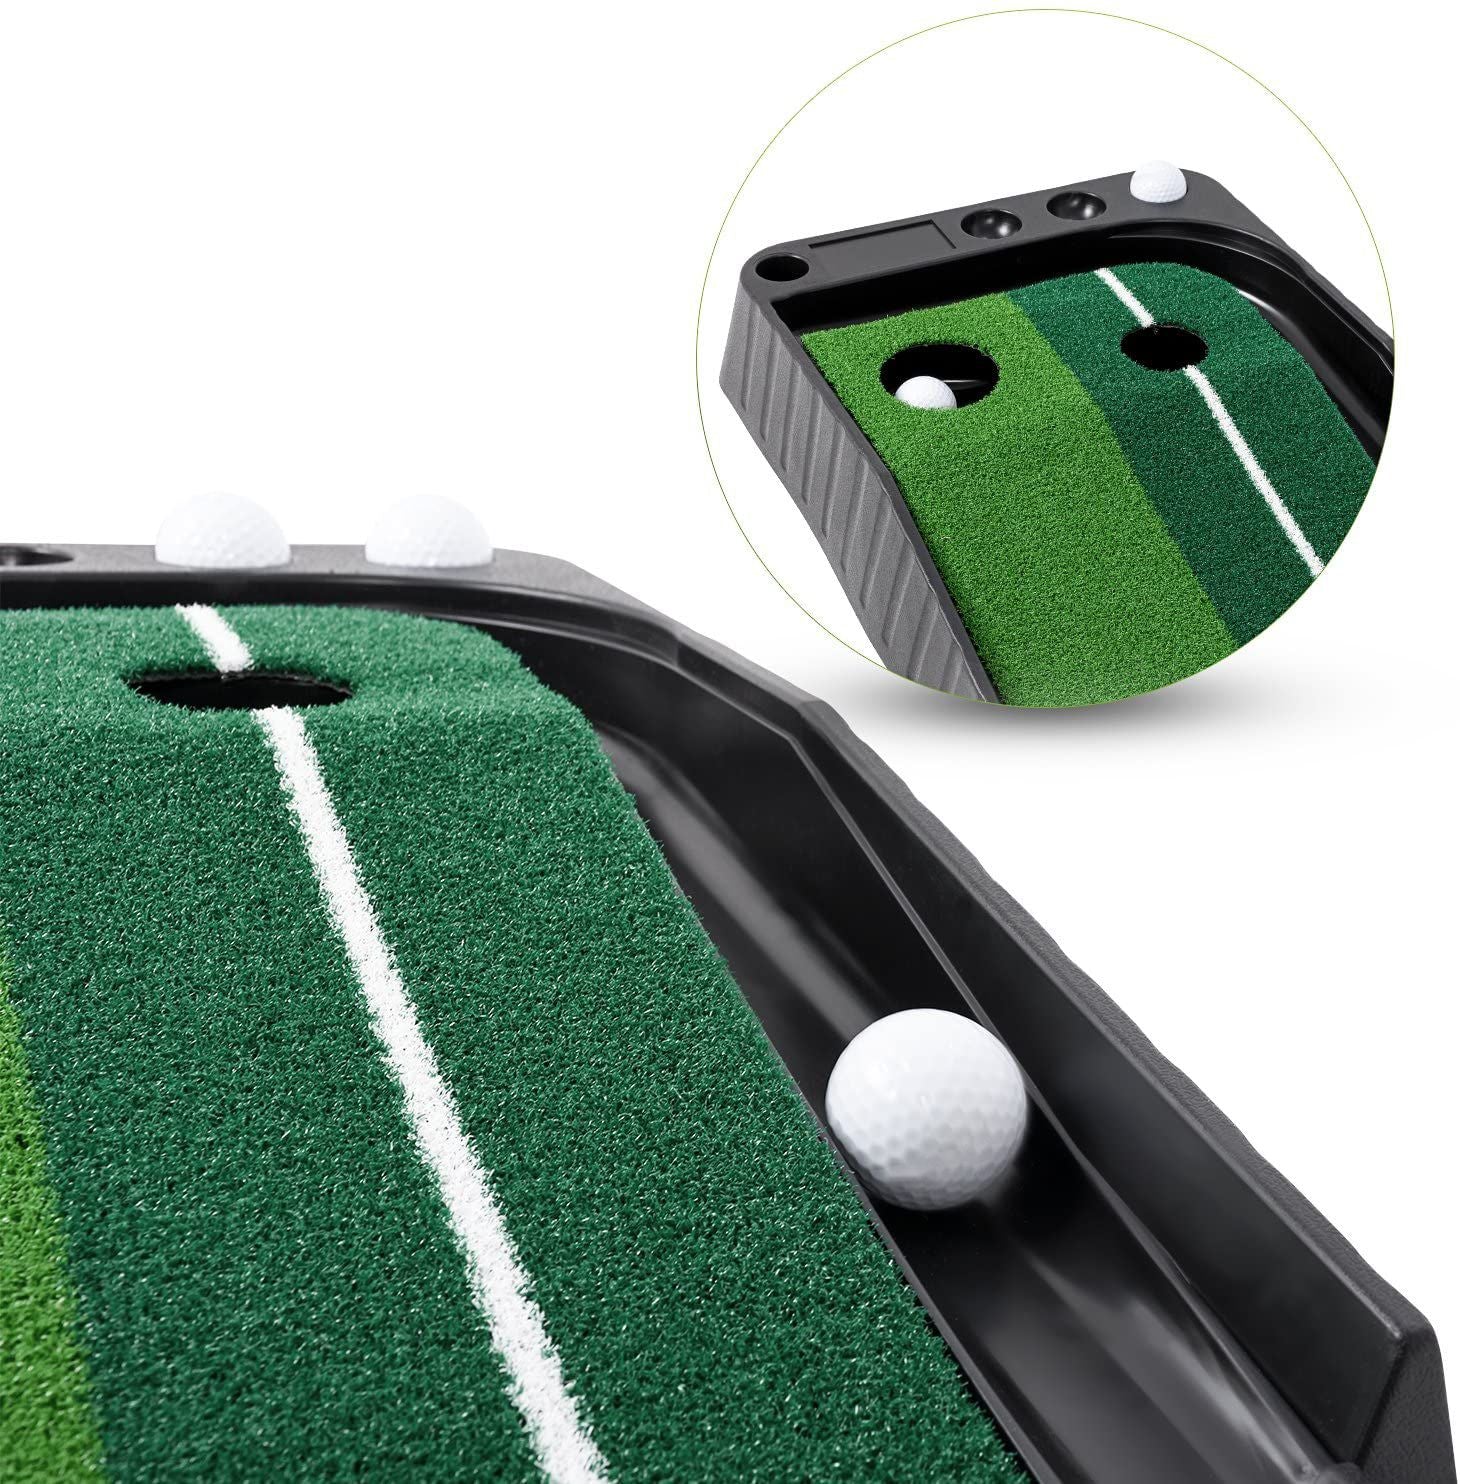 DS BS Indoor Mini Golf Practice Auto Ball Return Training Aid